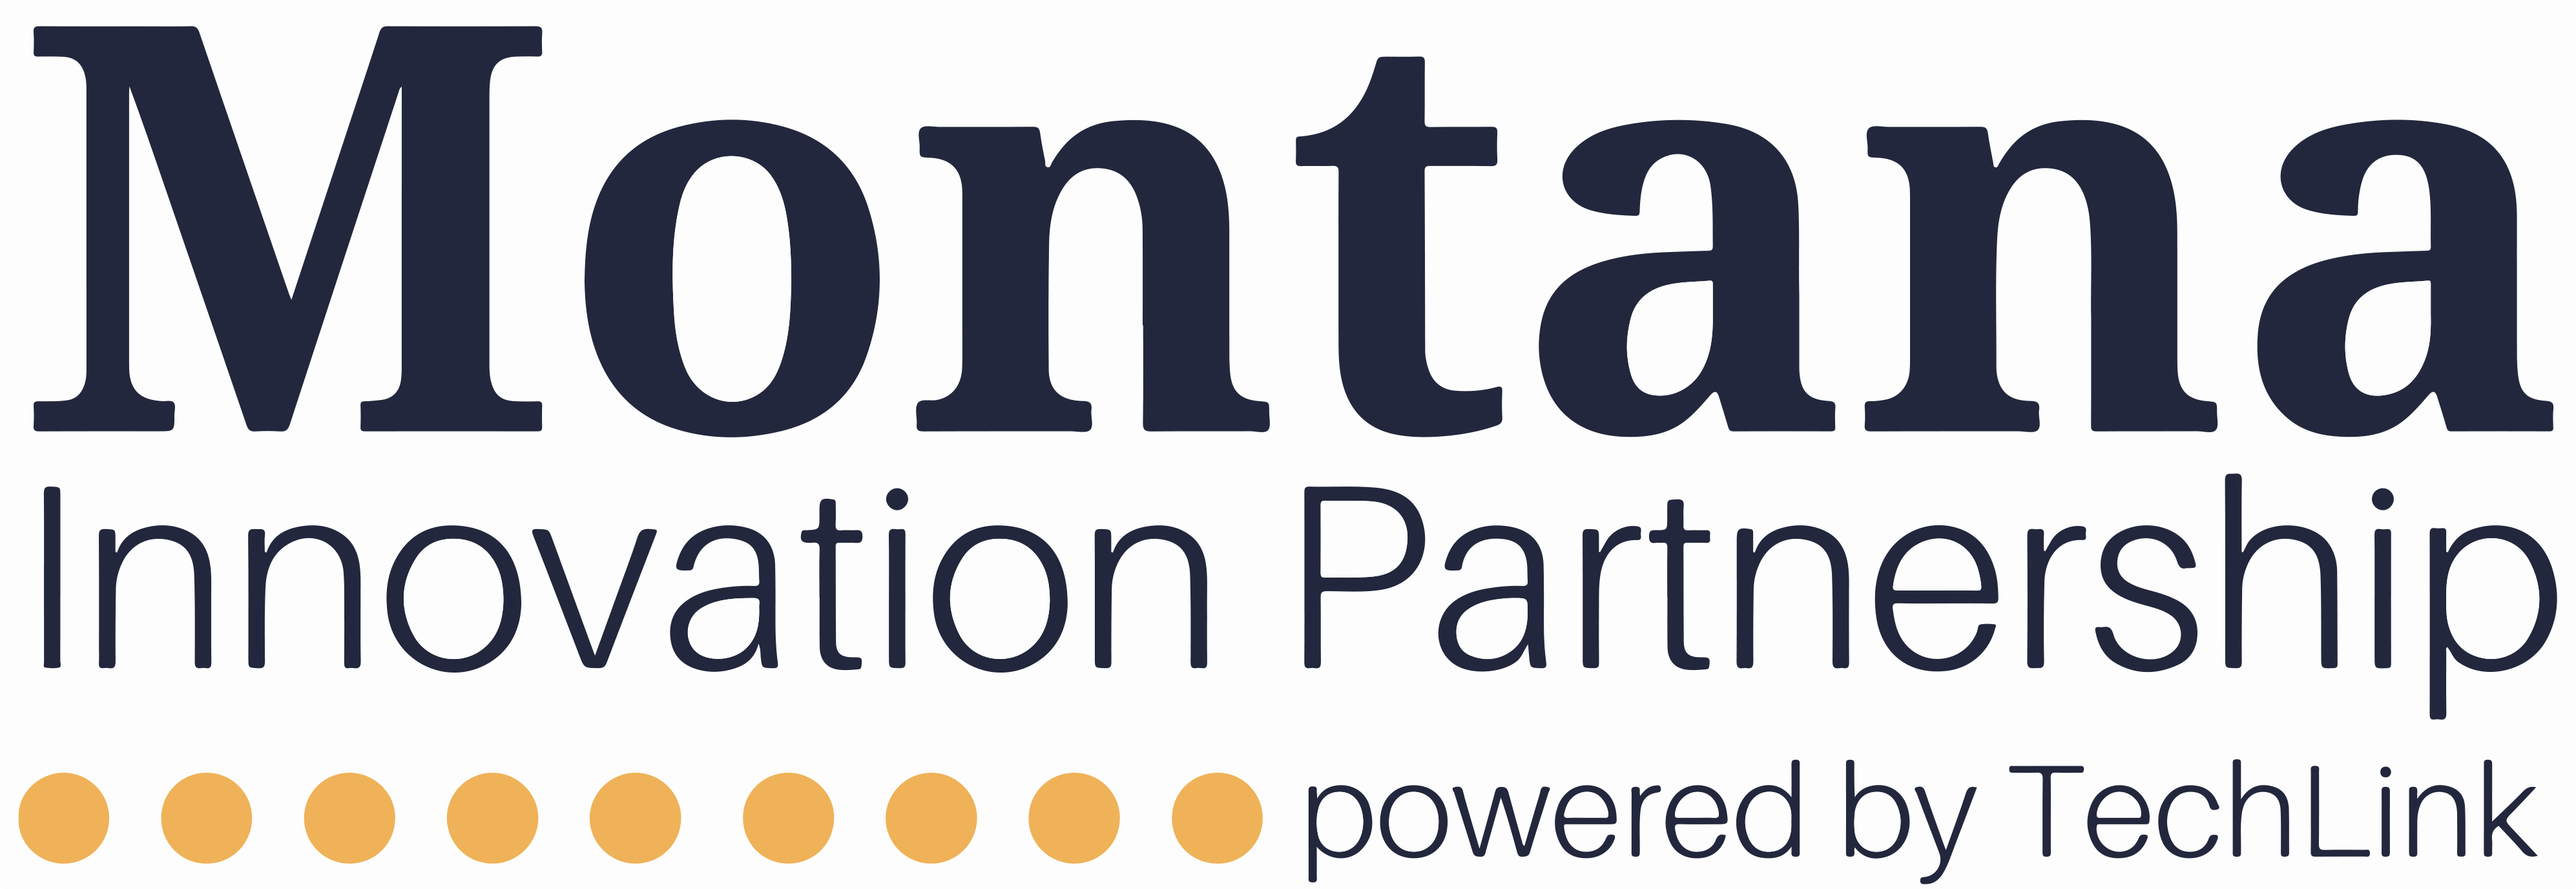 Montana Innovation Partnership